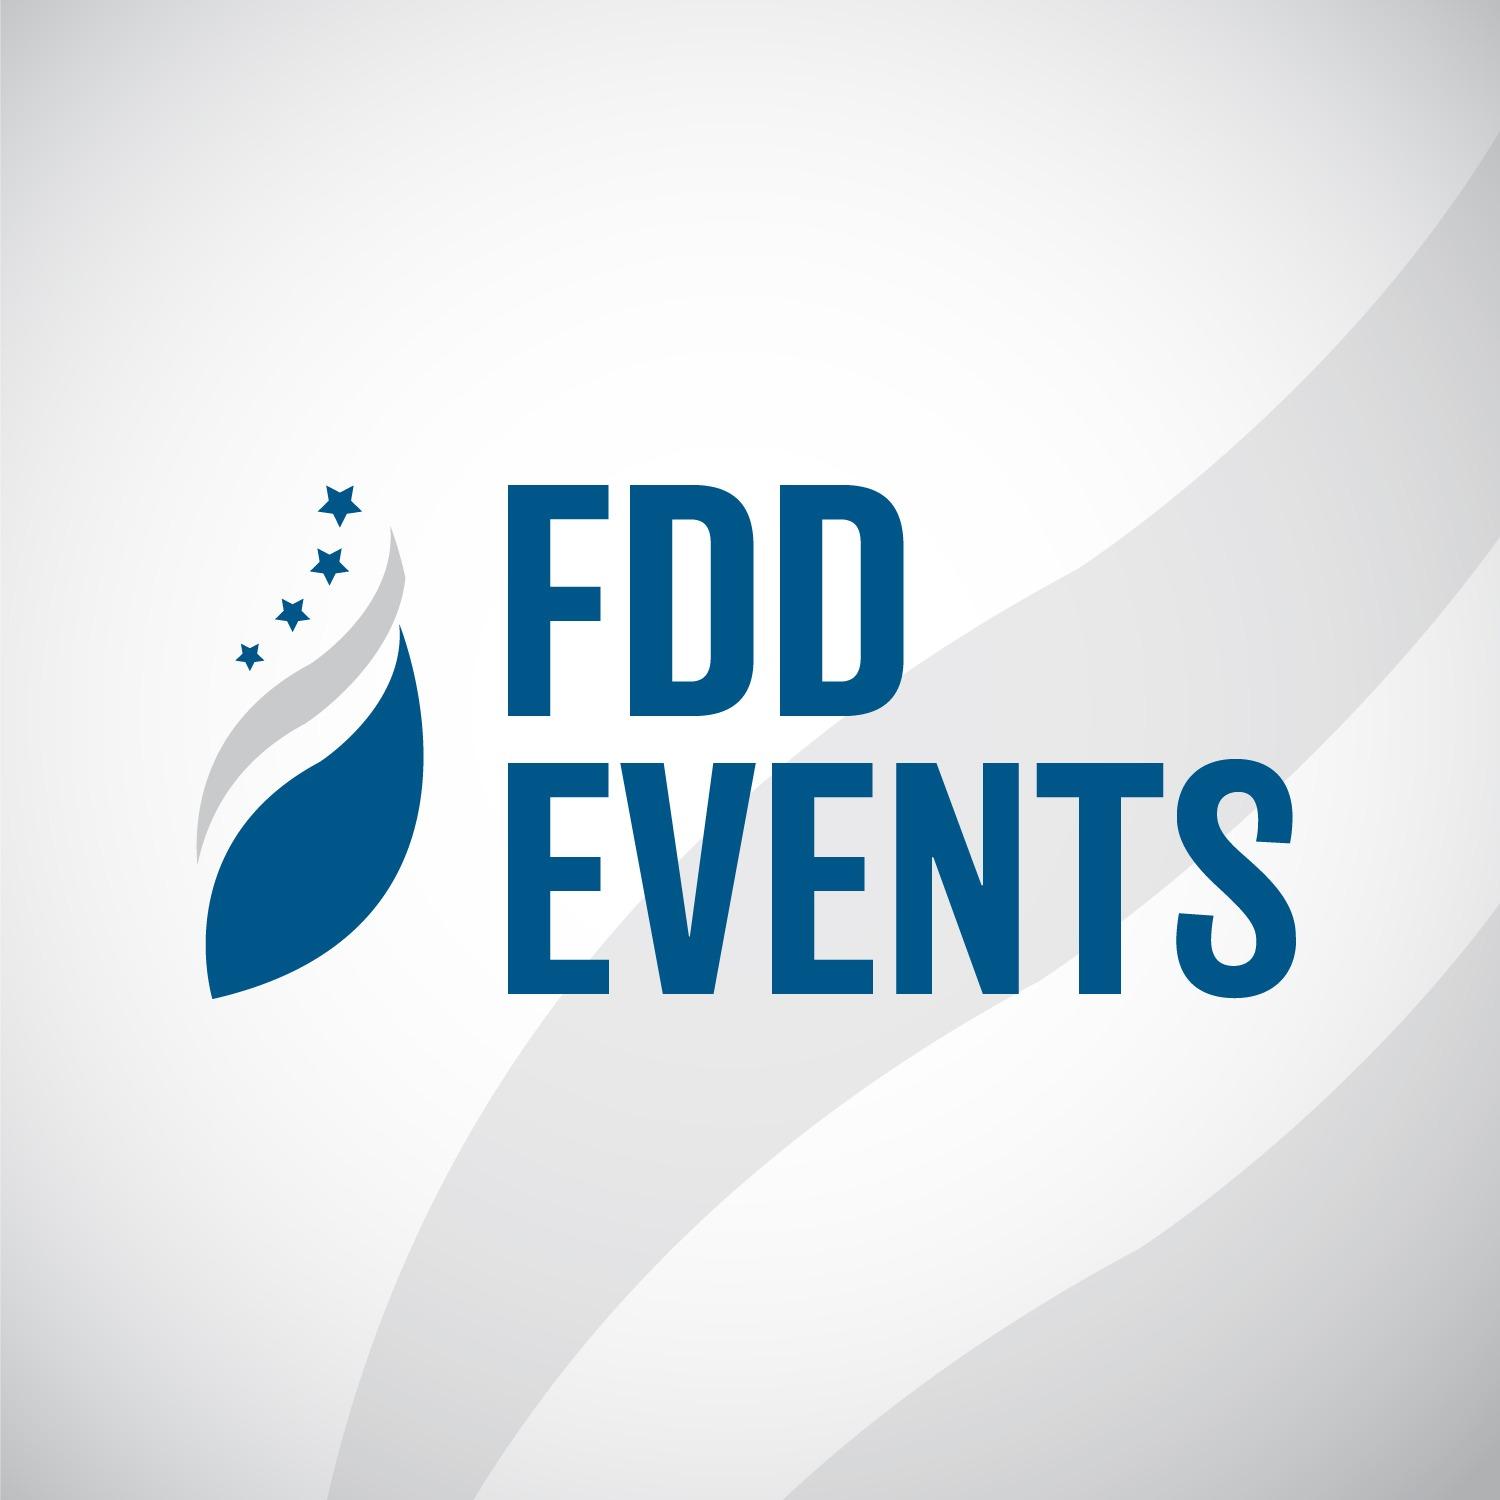 FDD Events